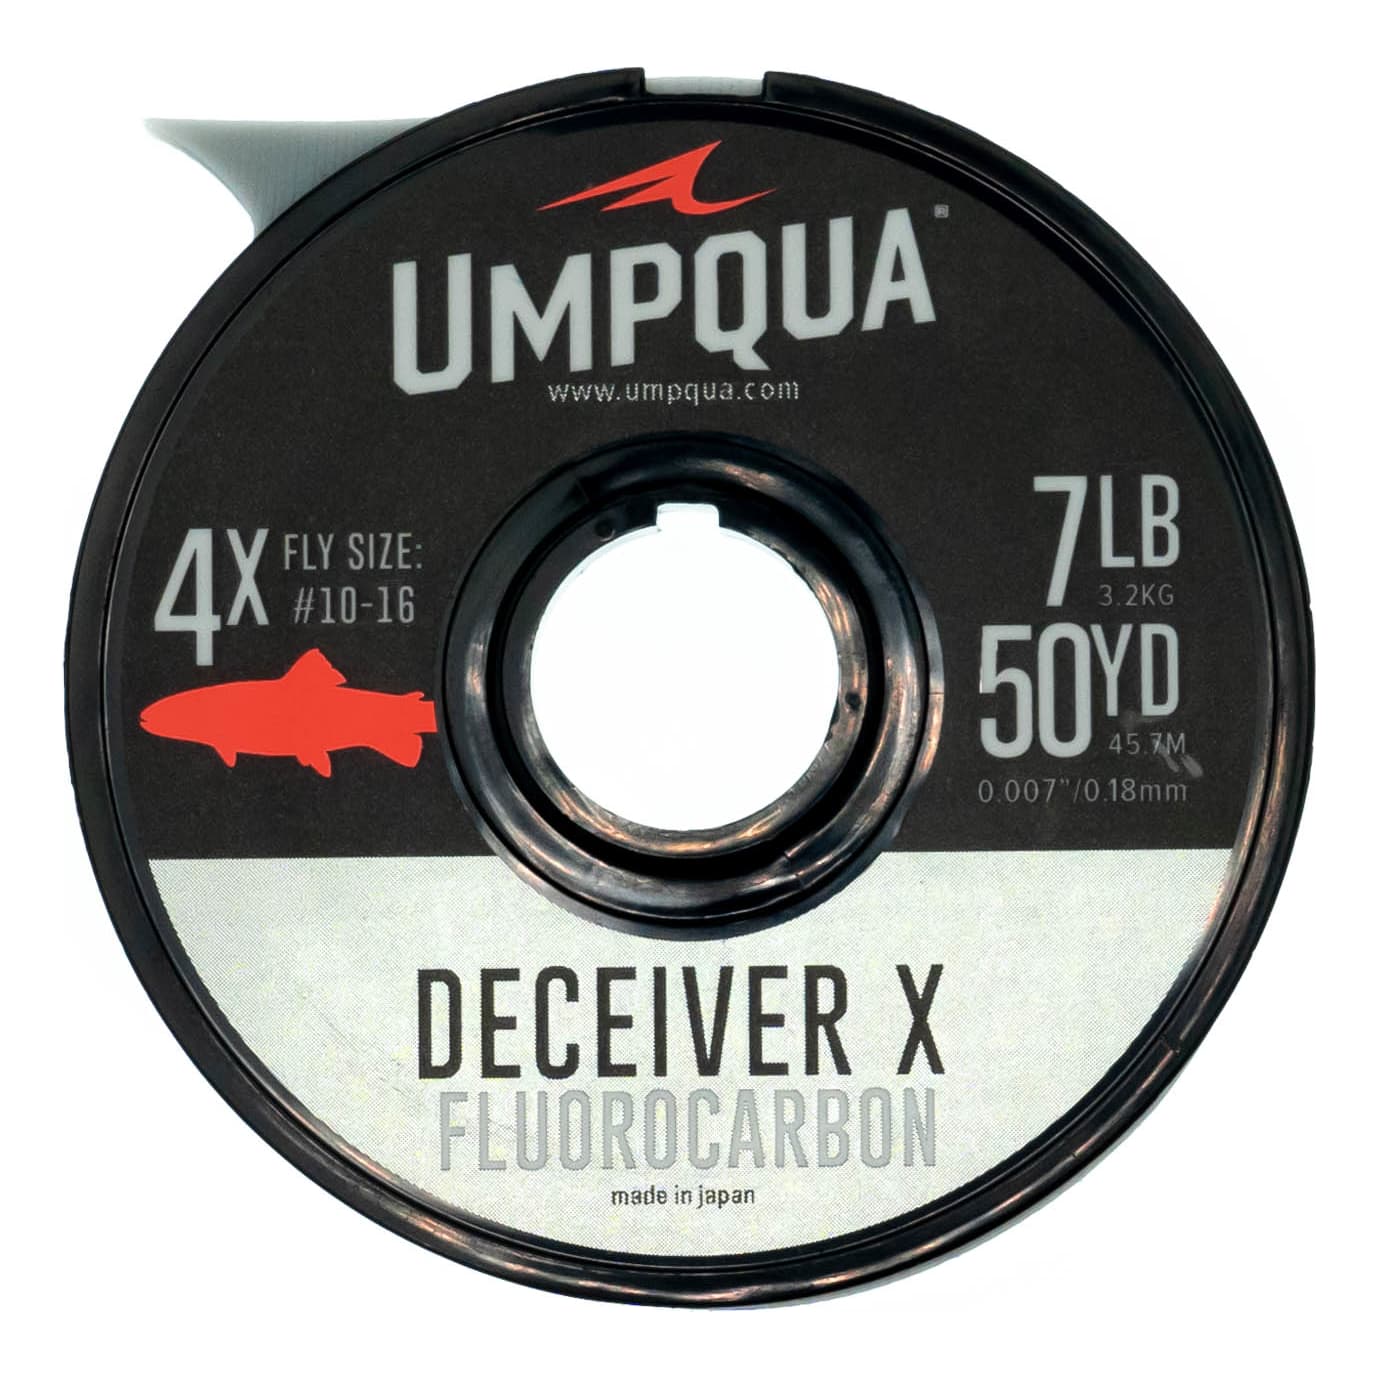 Umpqua Deceiver X Fluorocarbon Tippet